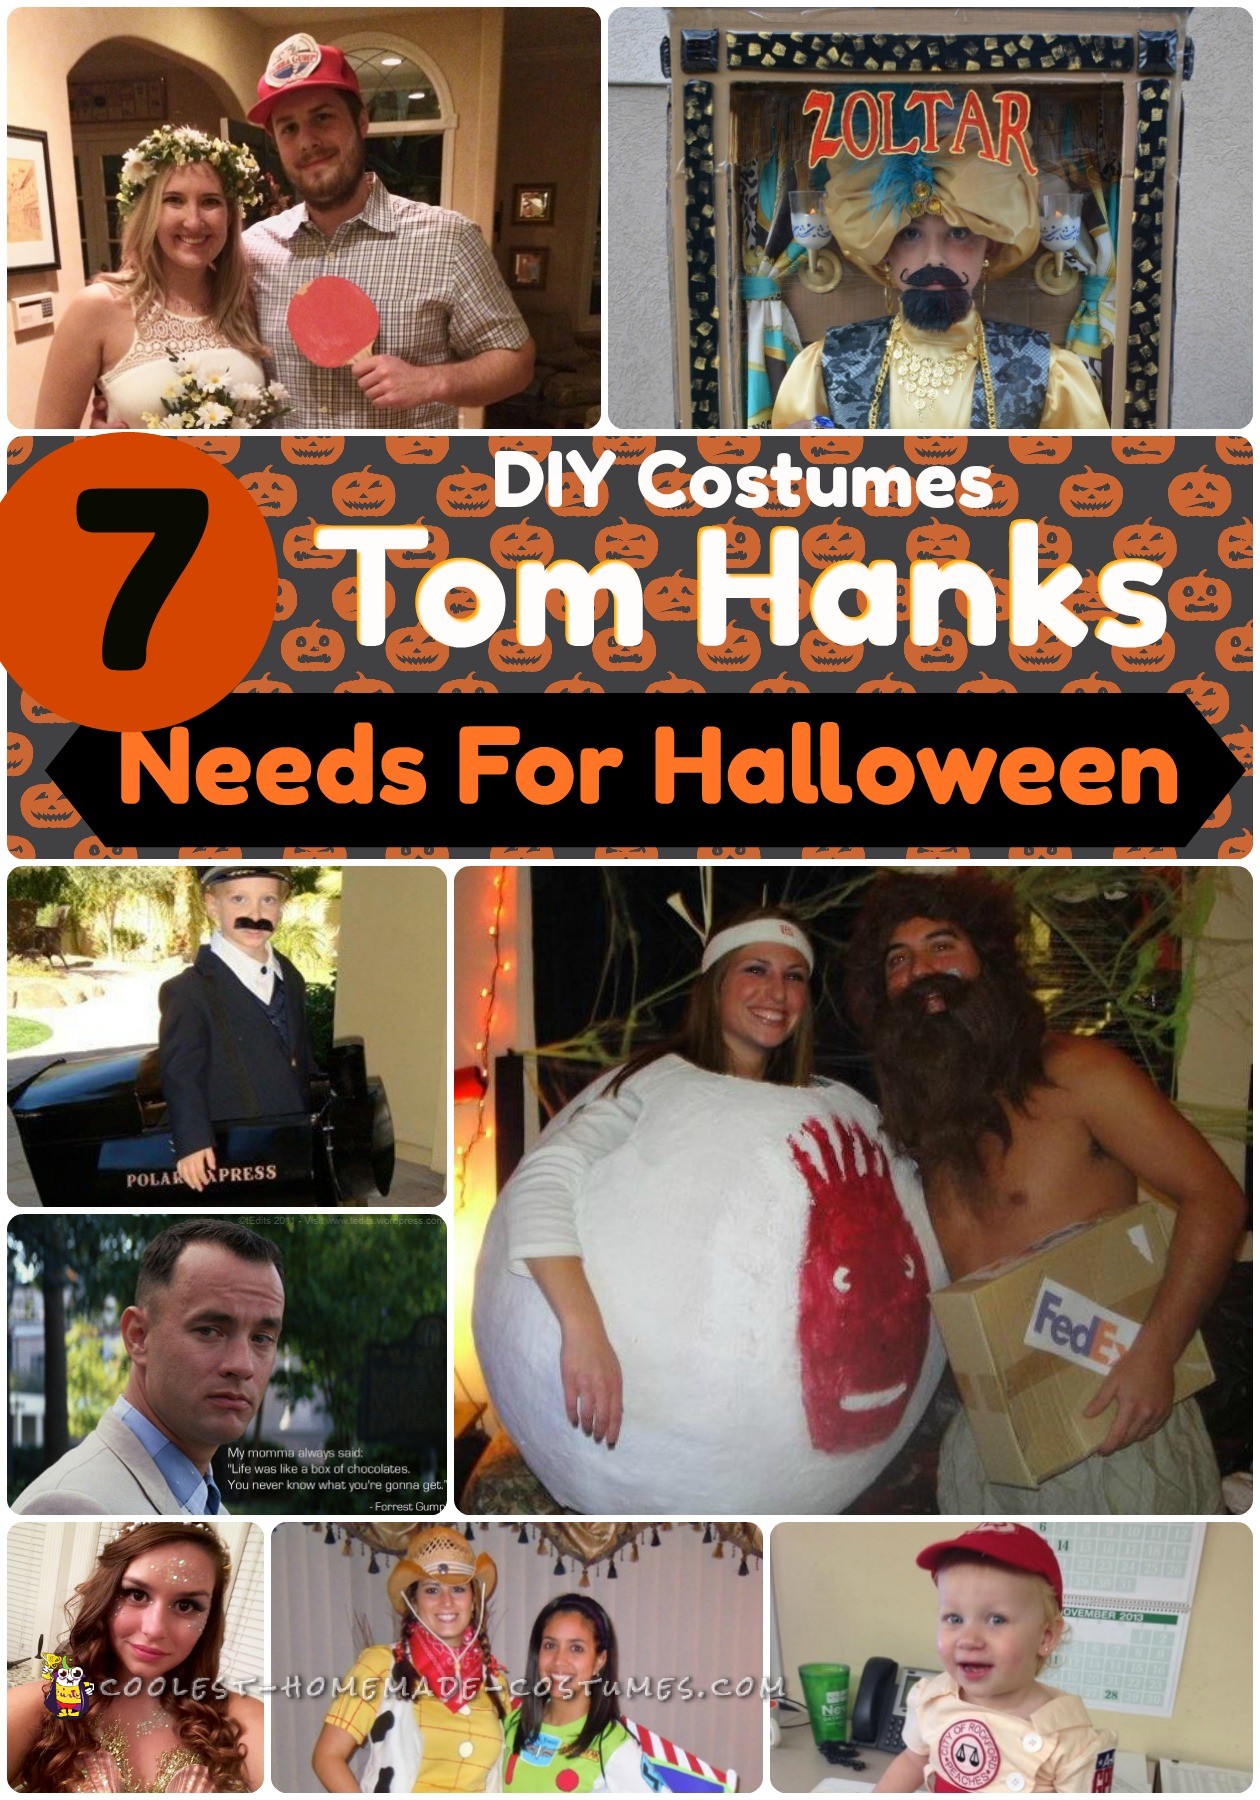 Top 7 Movie Character Costumes Tom Hanks Needs for Halloween